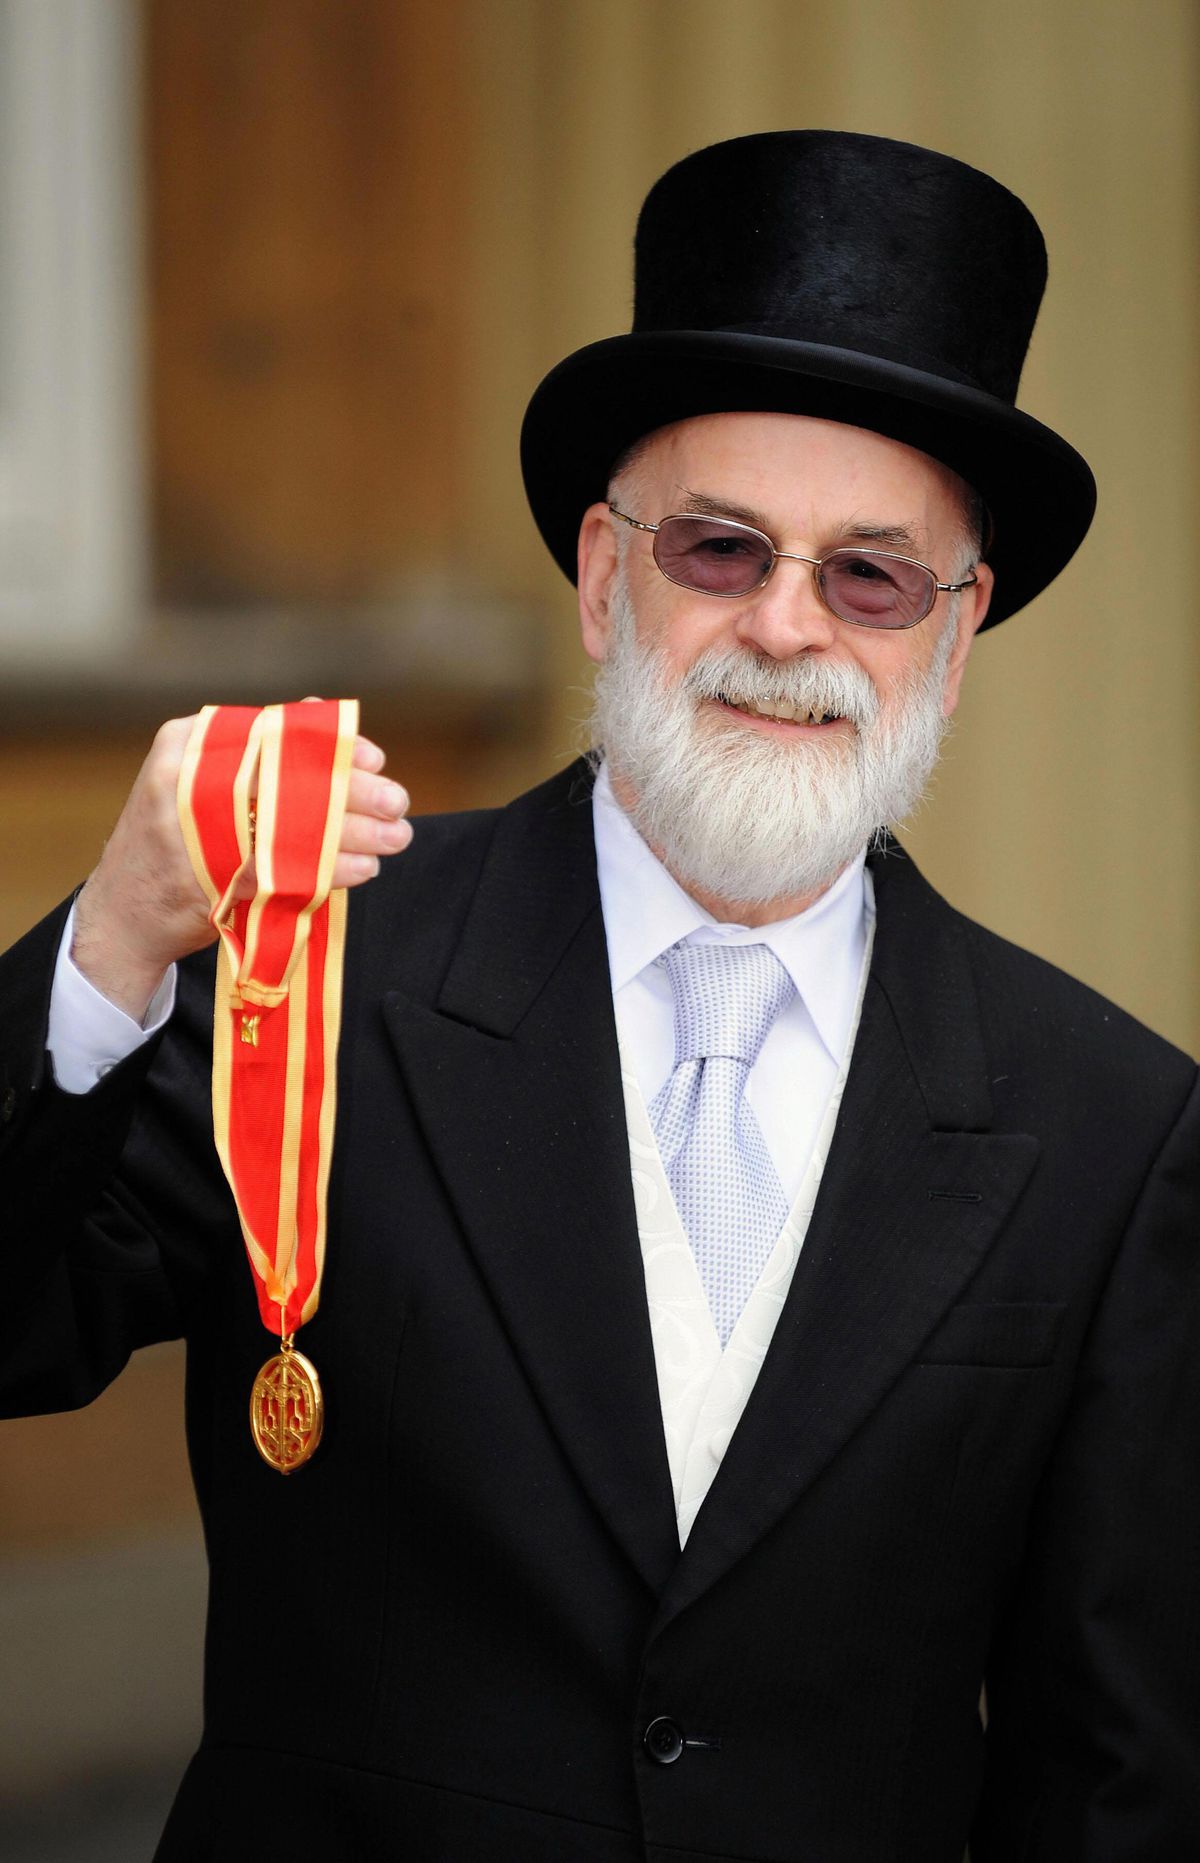 Sir Terry Pratchett displays his knighthood award outside Buckingham Palace.